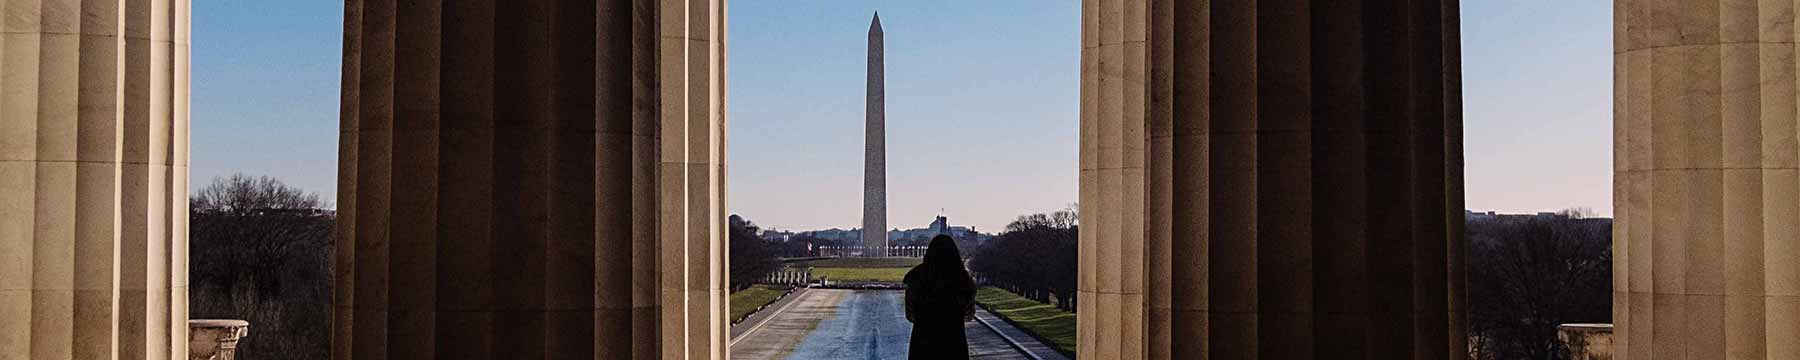 Single person looking at Washington Monument.